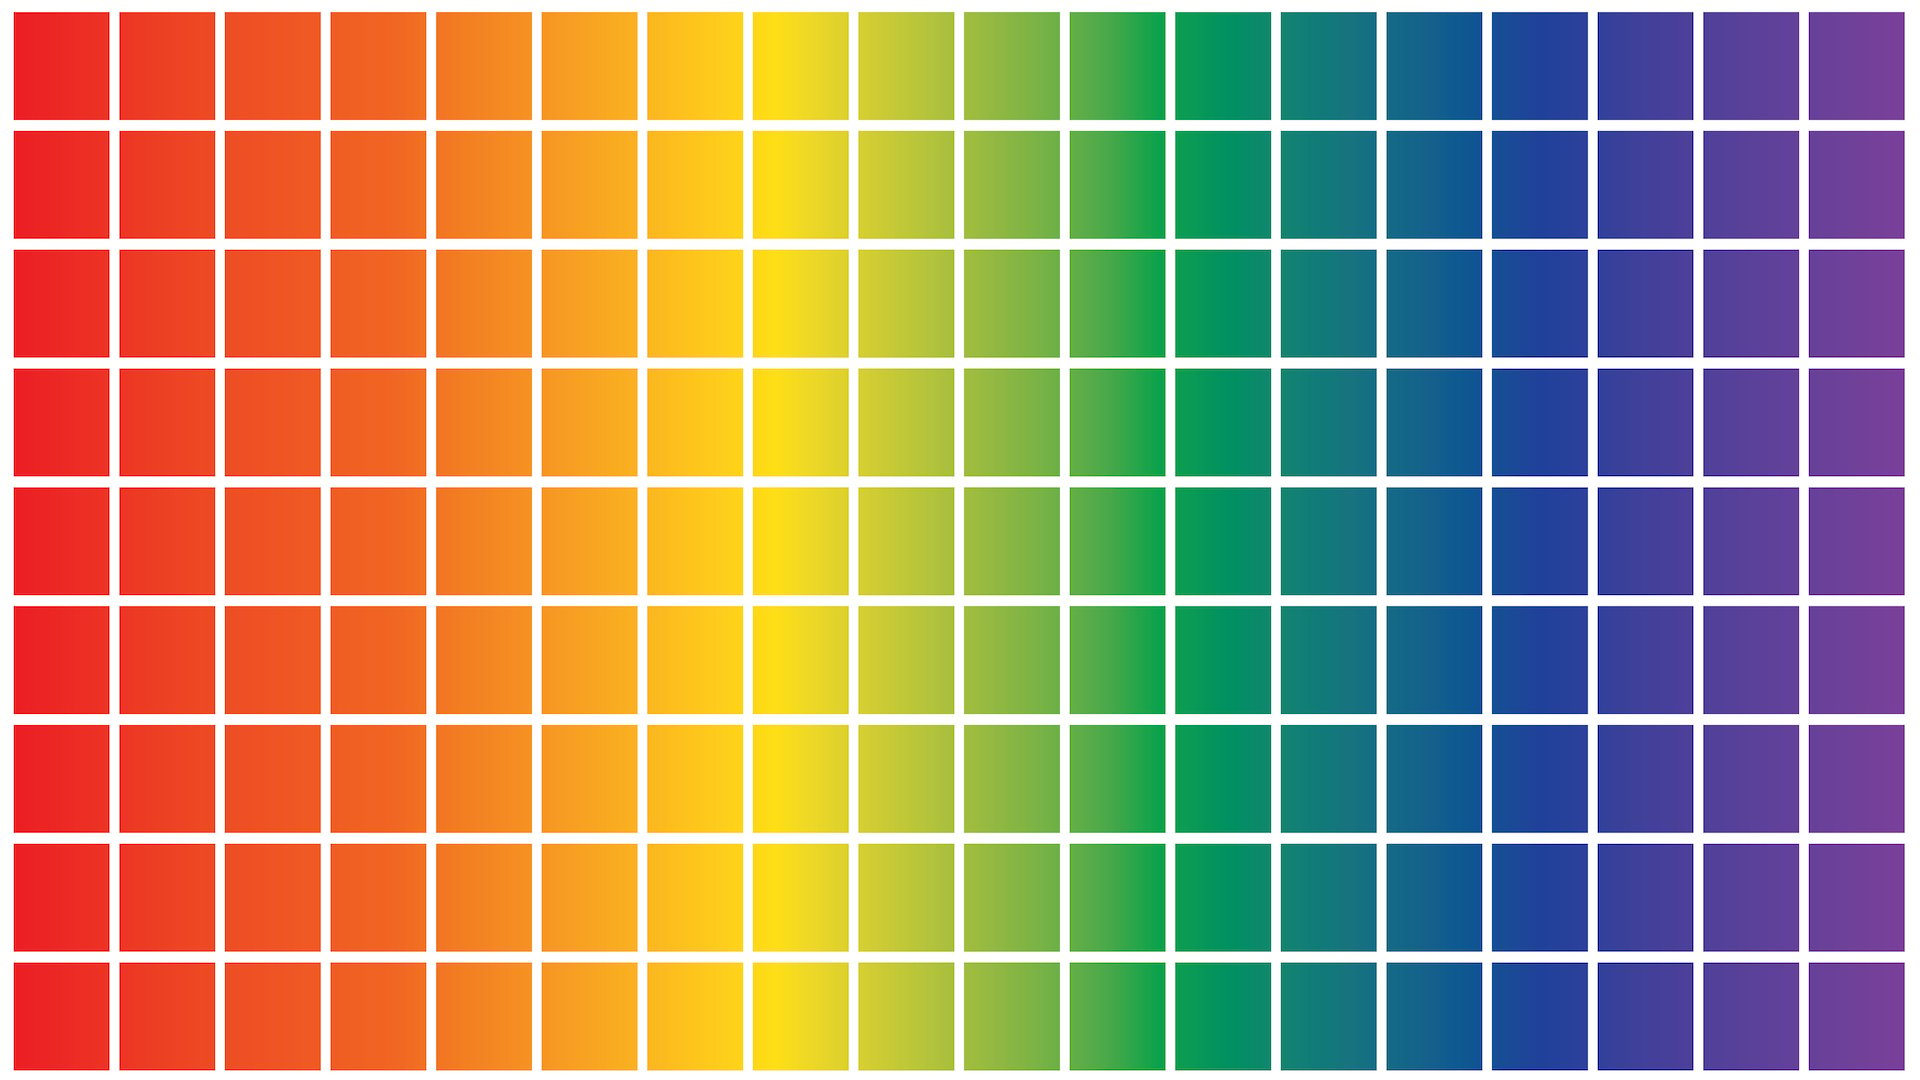 A colour chart